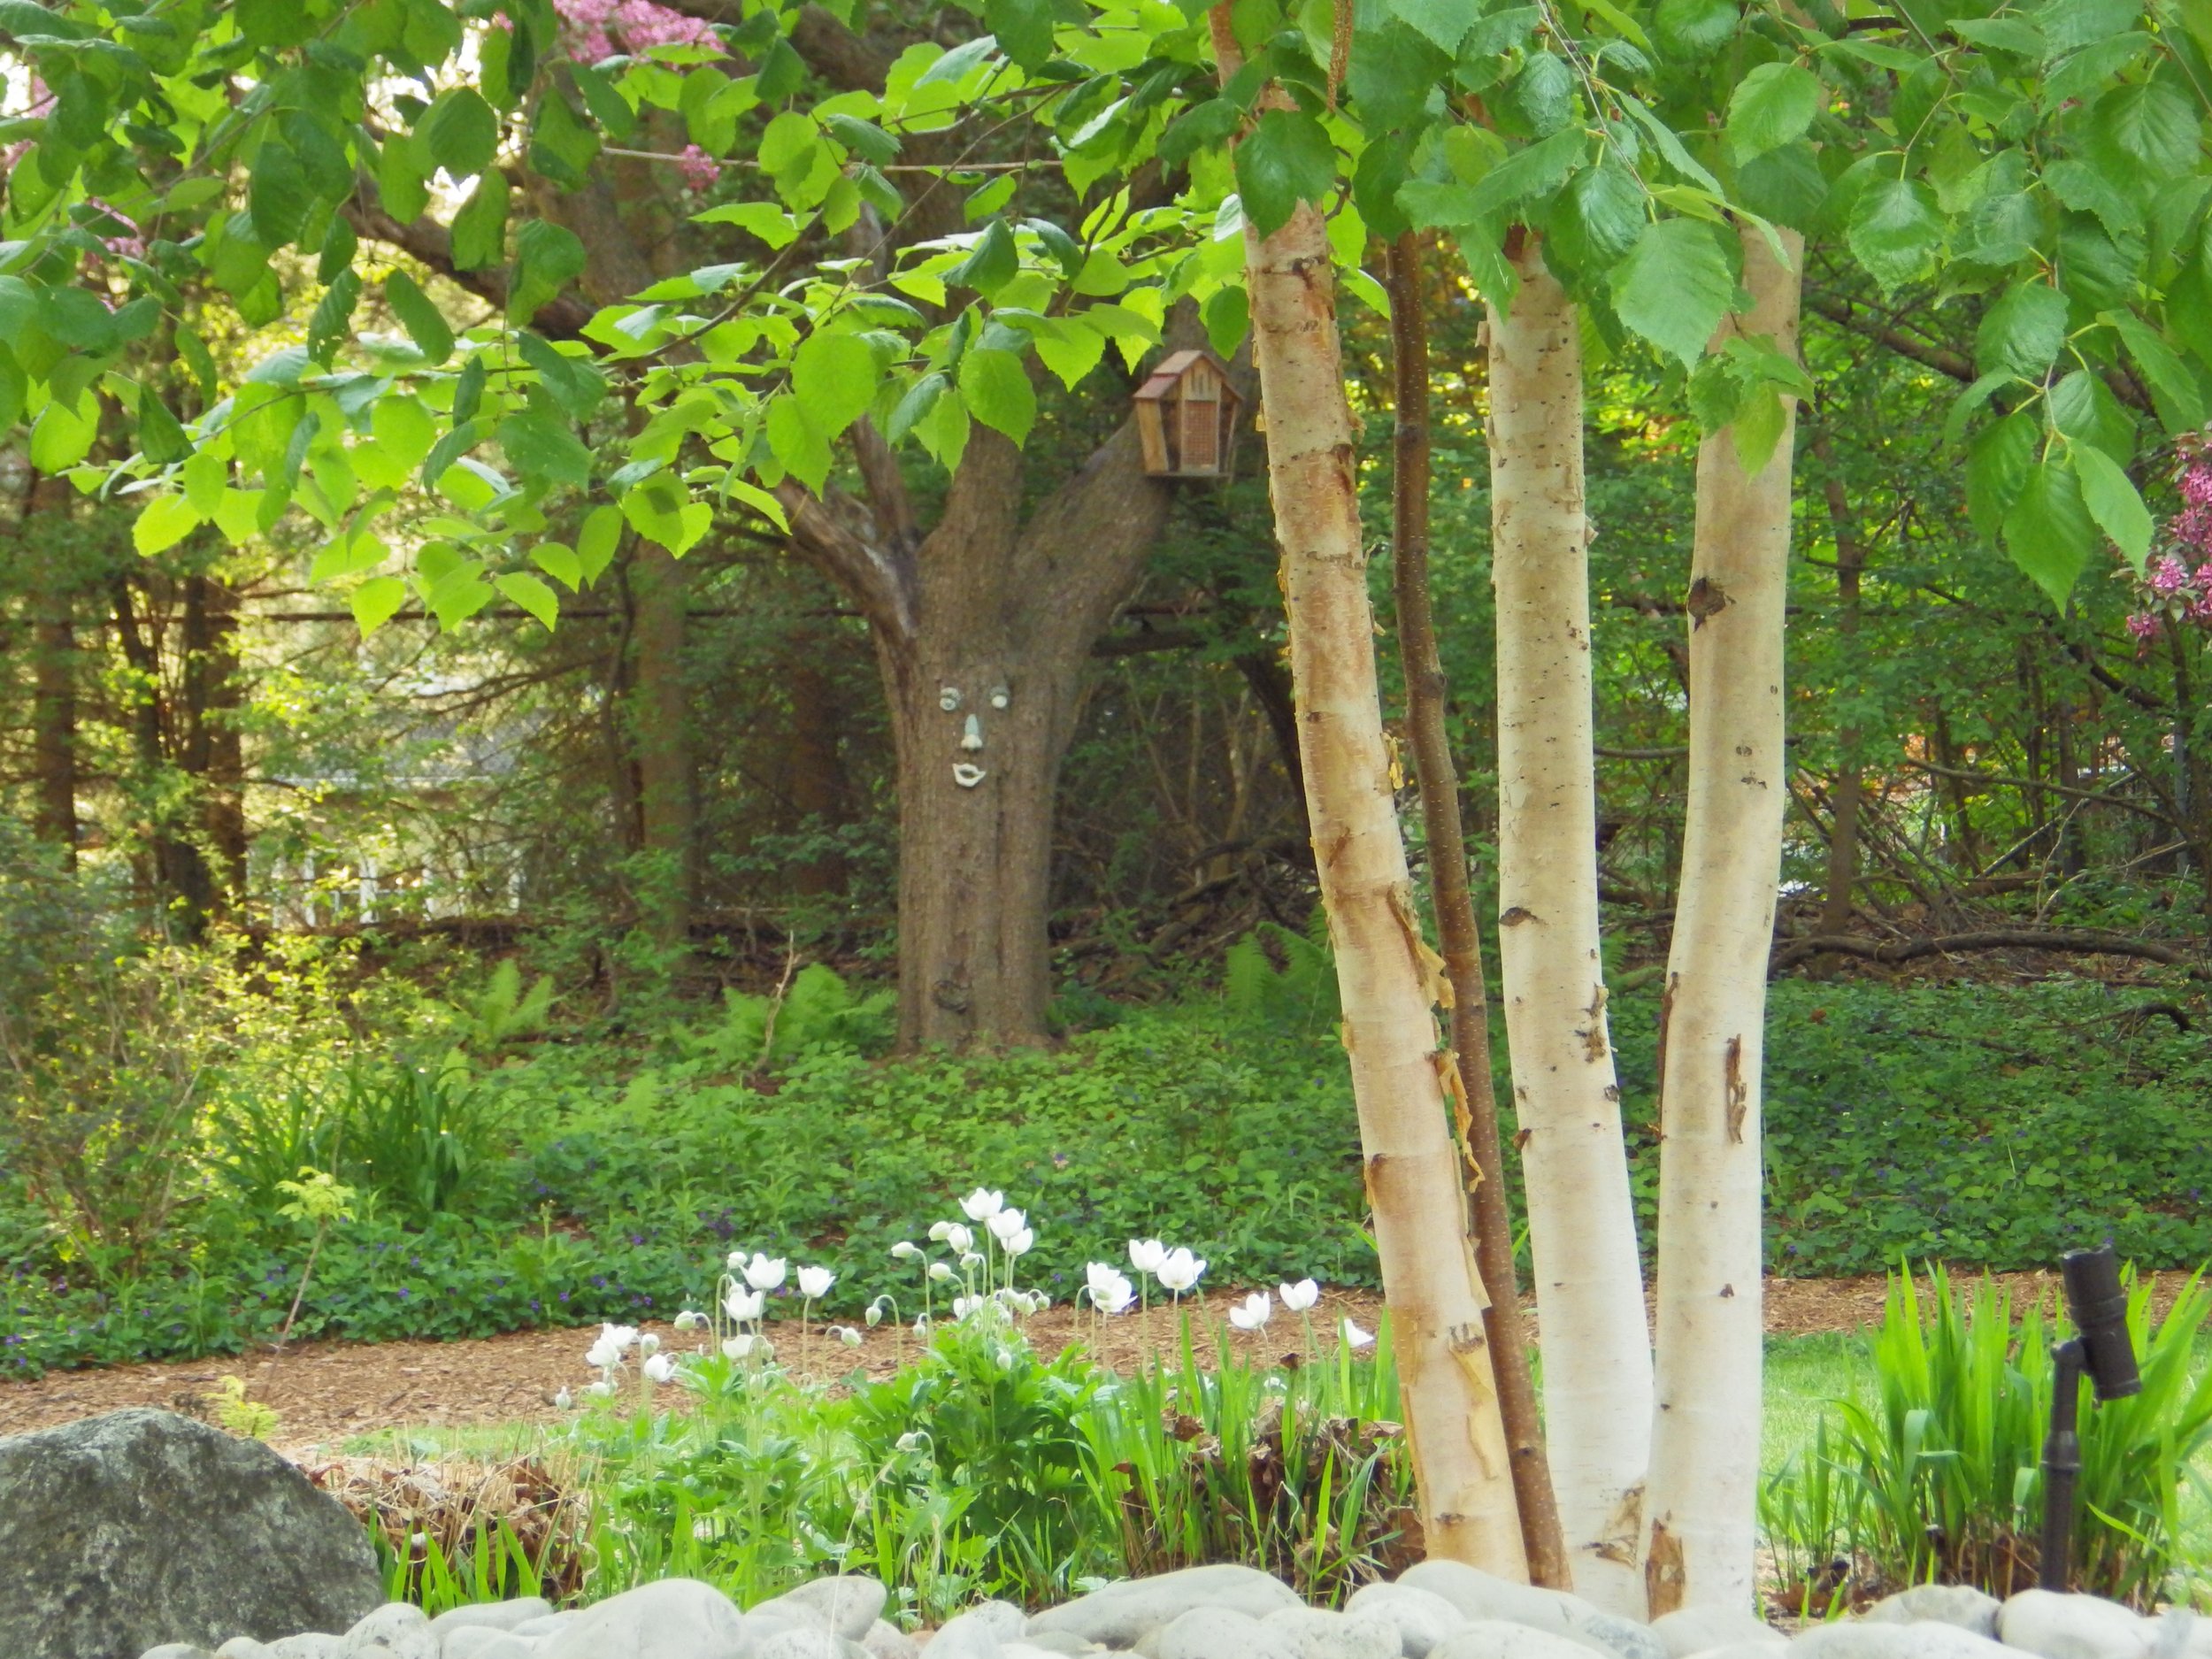 Best shade trees: Poplar tulip tree, birch, maple and oak